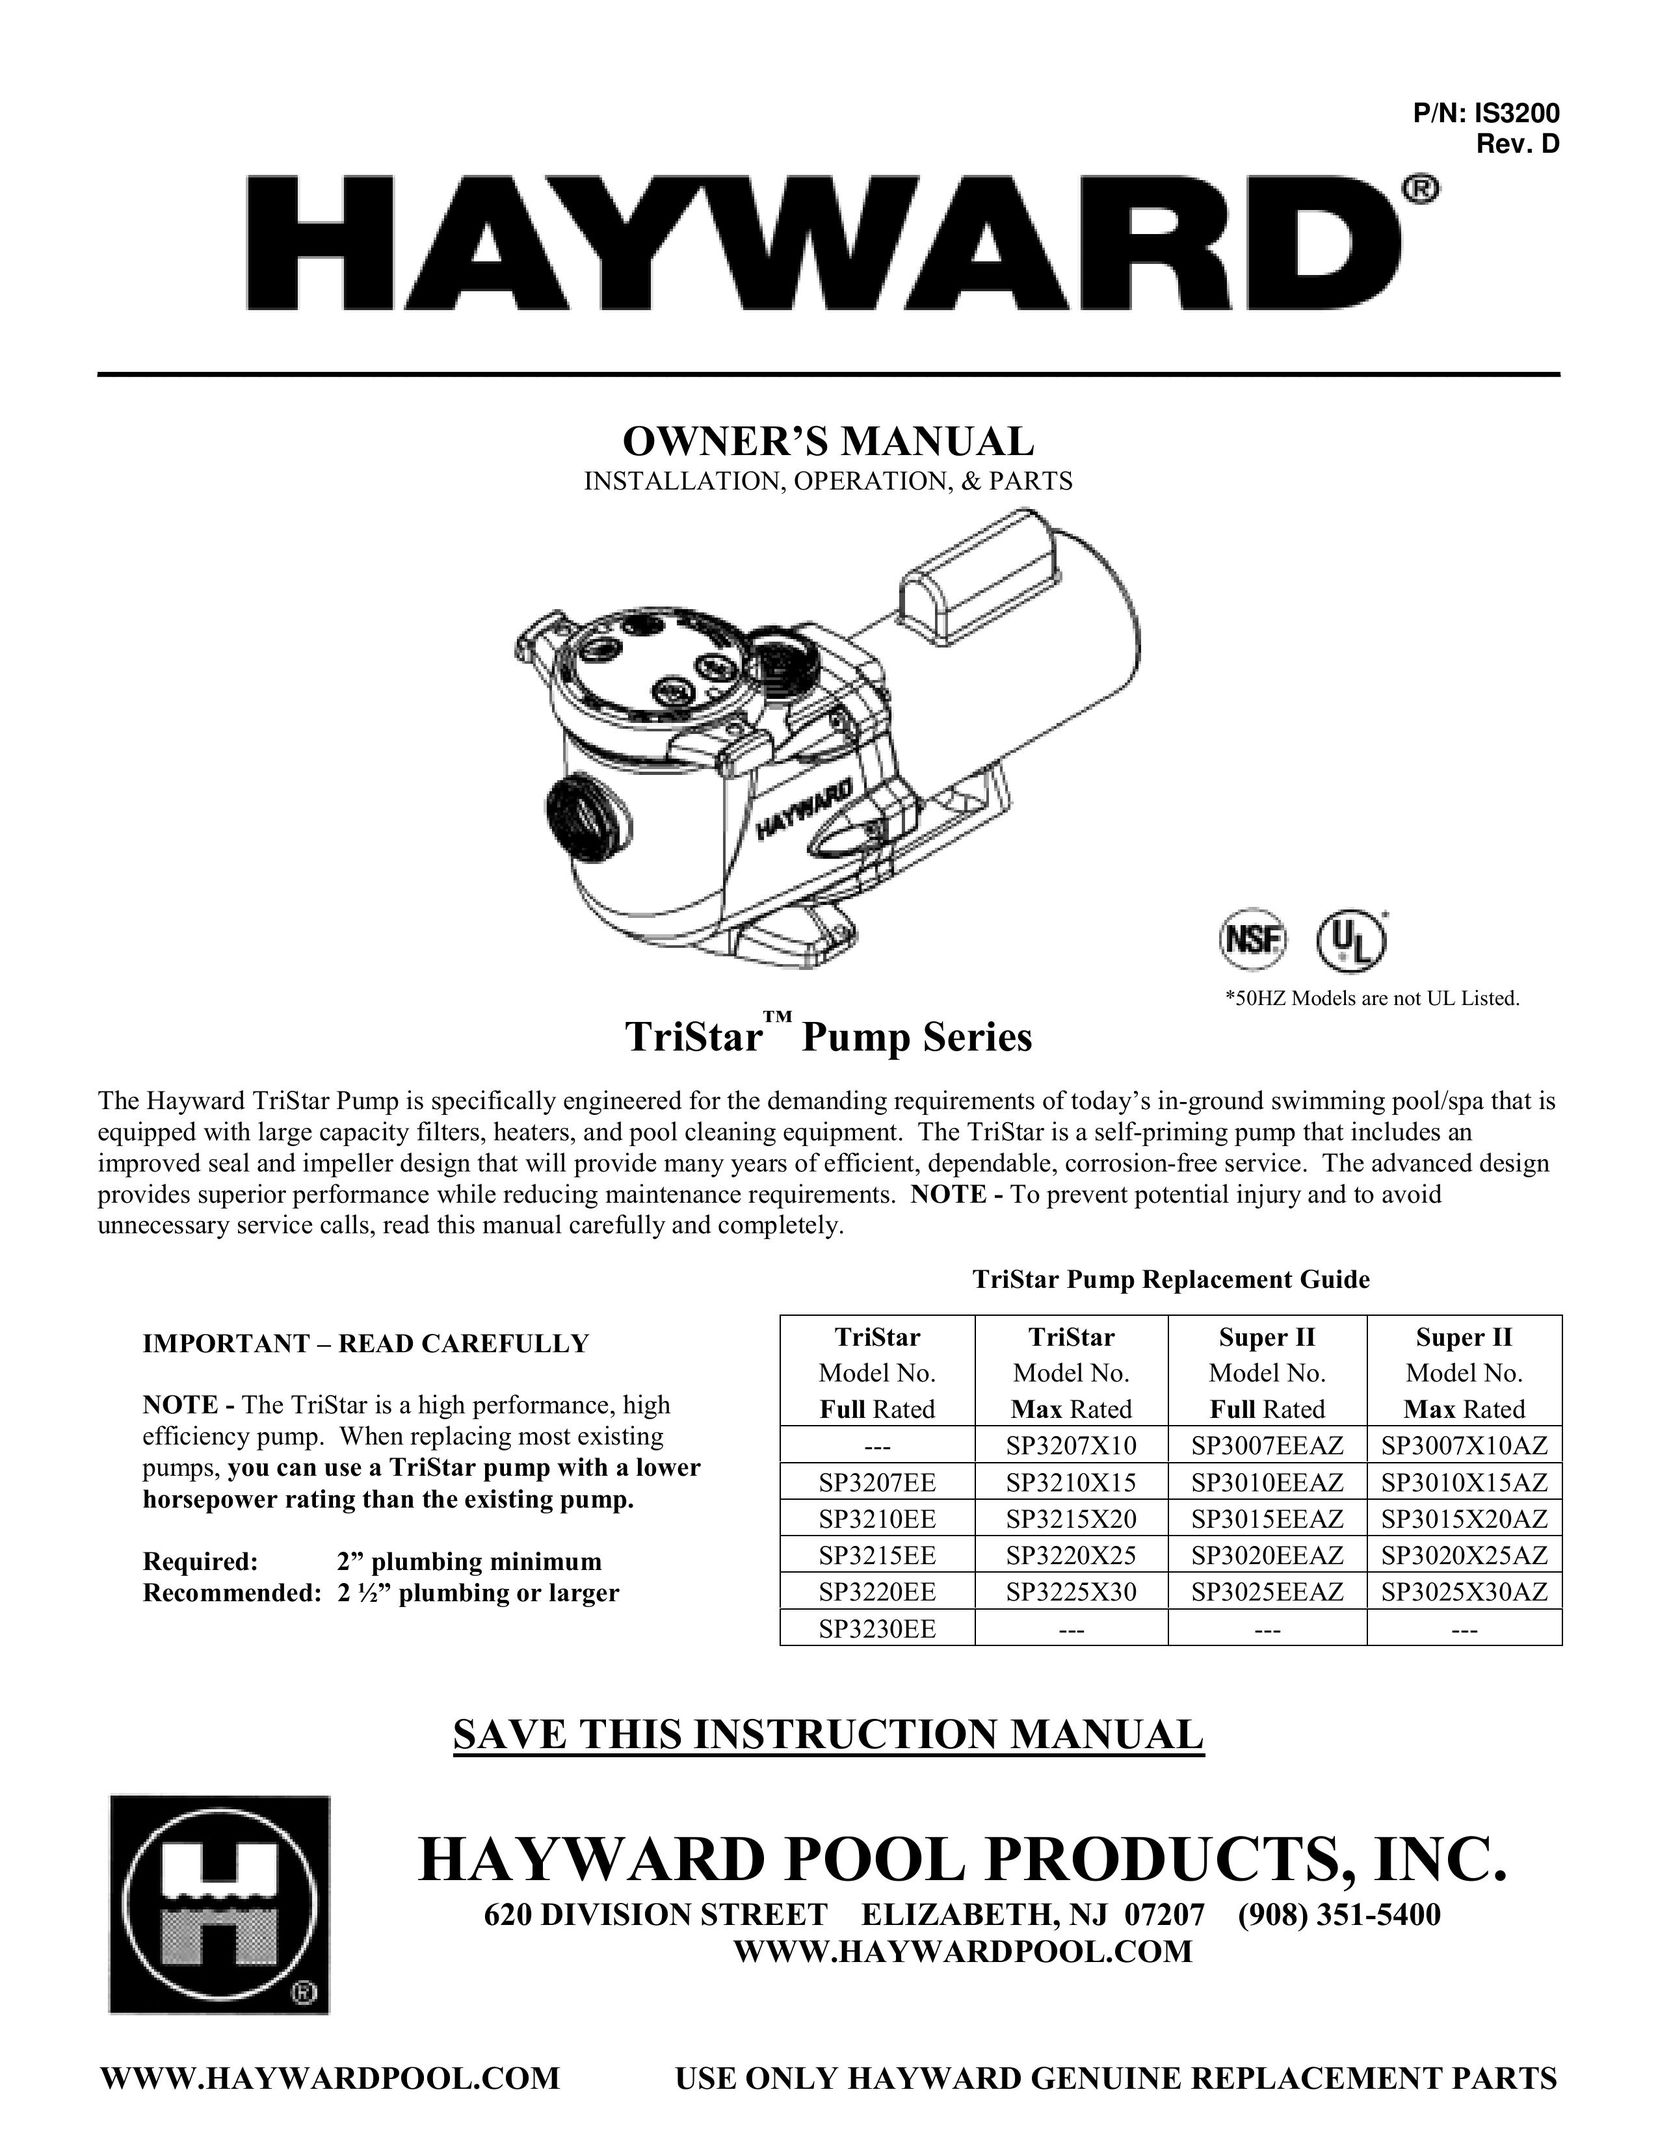 TriStar SP3010X15AZ Heat Pump User Manual